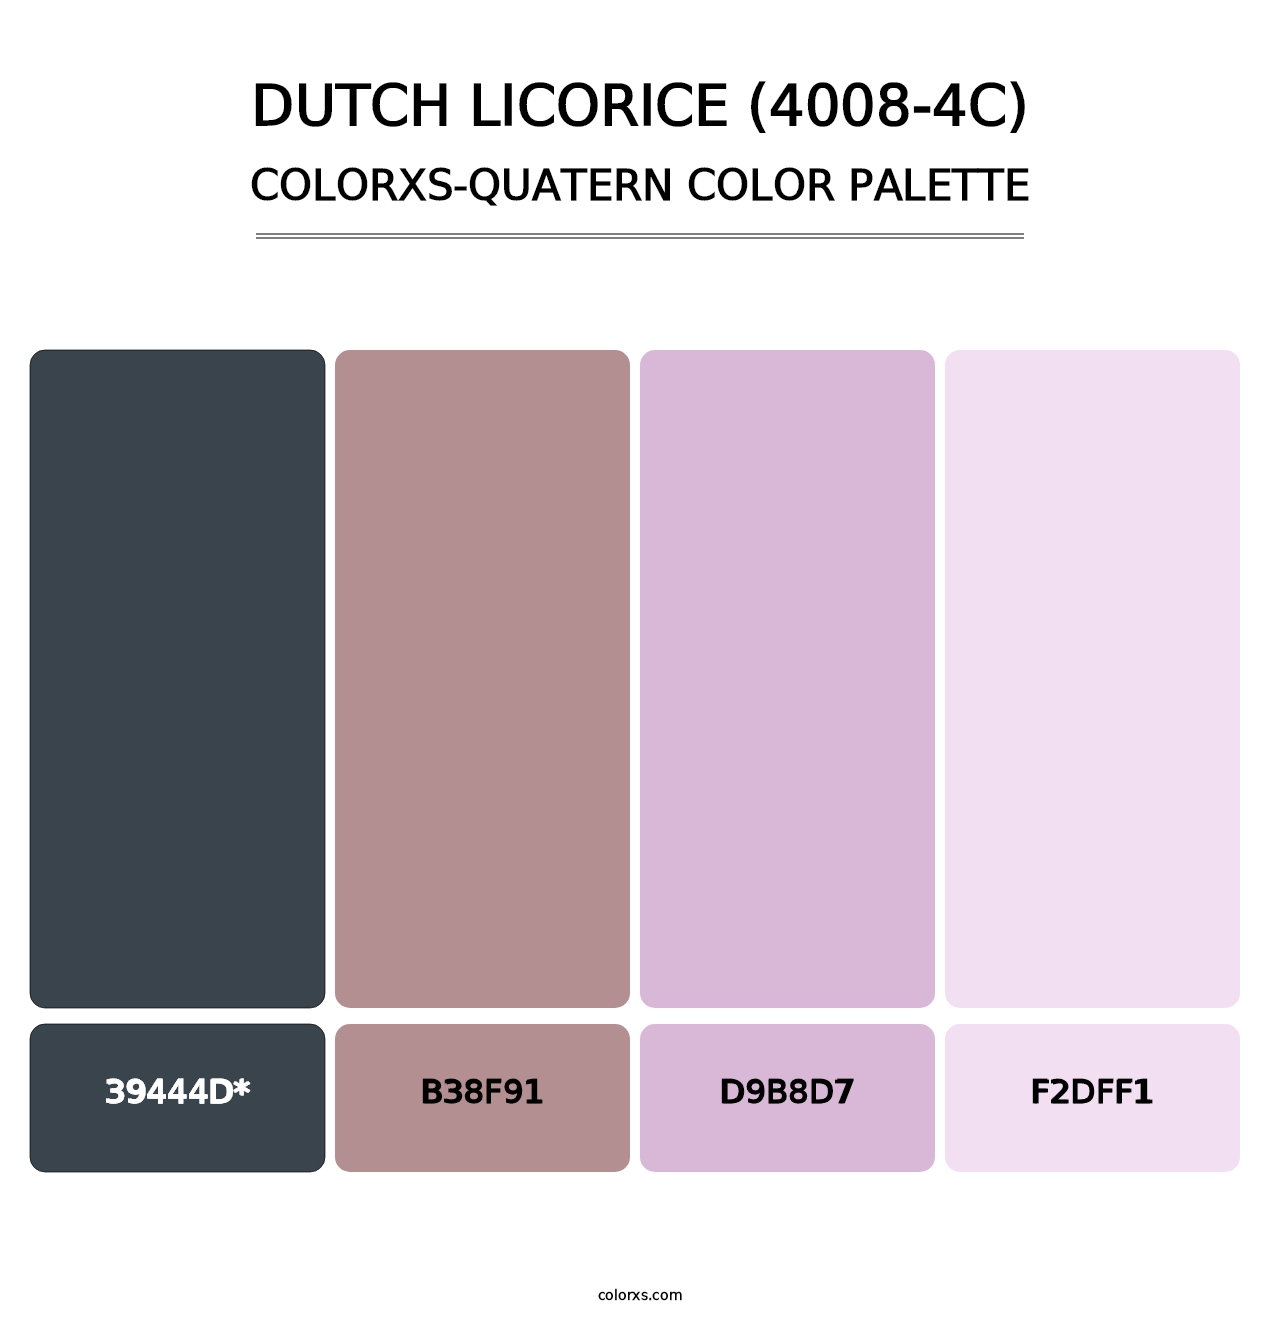 Dutch Licorice (4008-4C) - Colorxs Quatern Palette